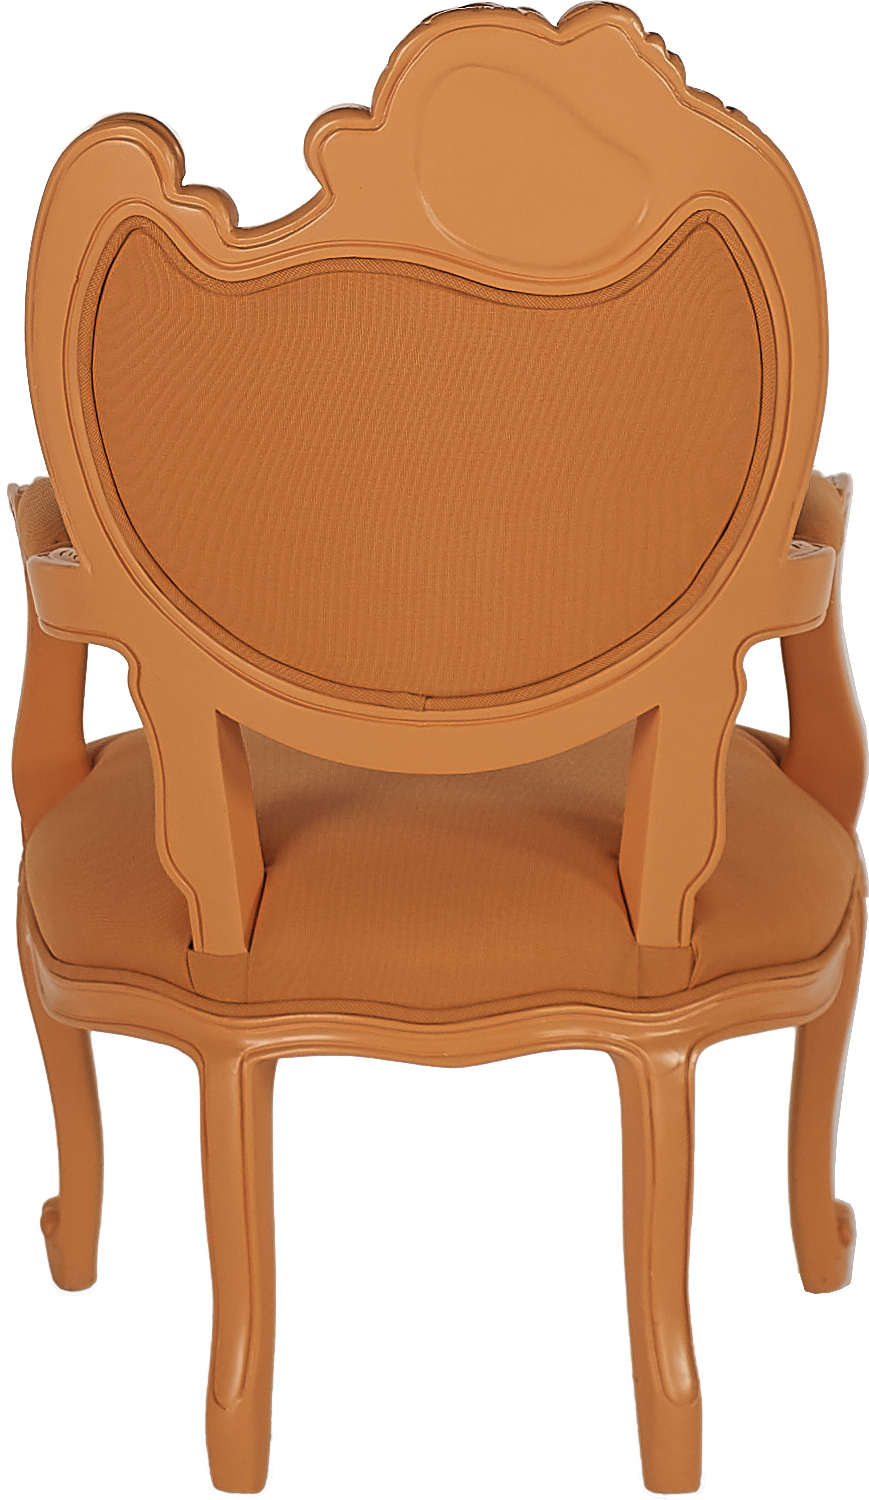 red chaise lounge chair PolArt Chairs